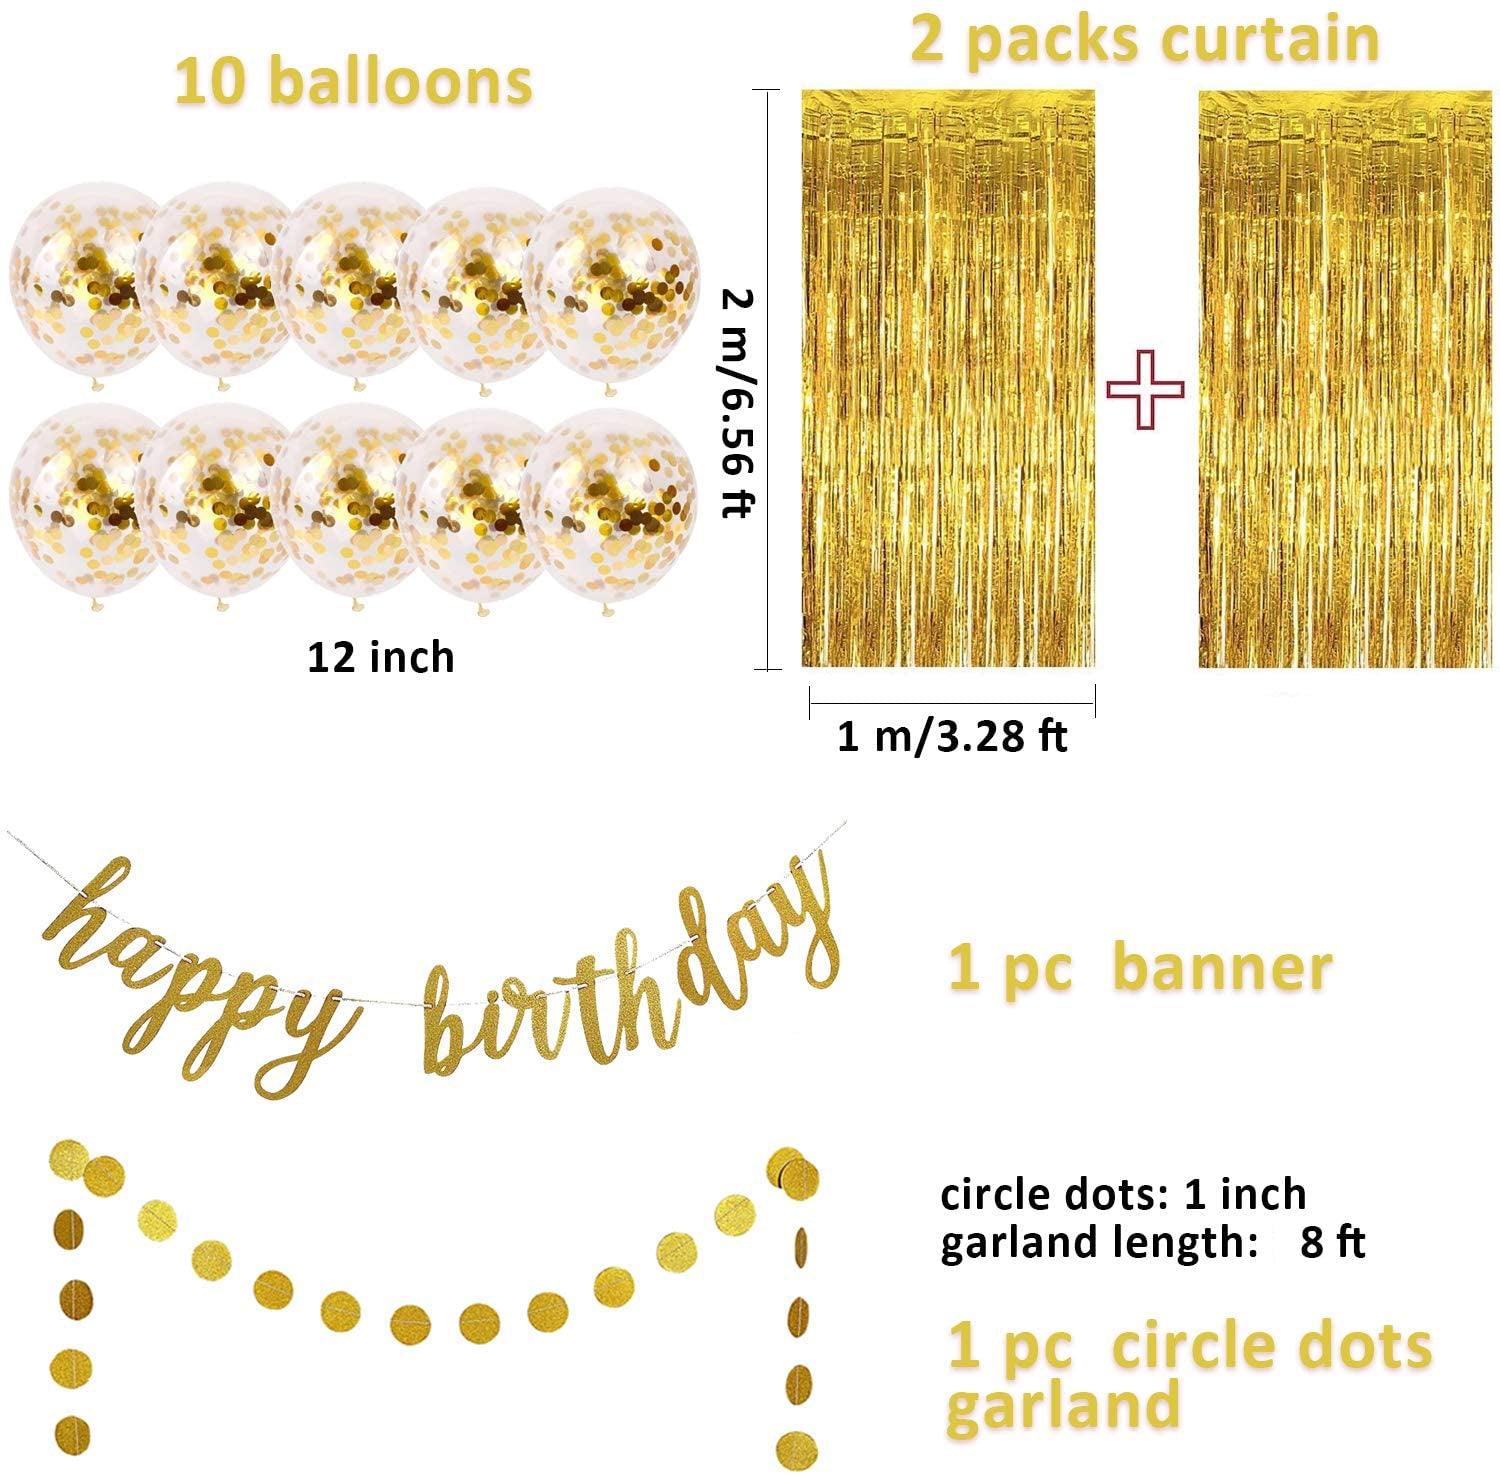 Gold Confetti Happy Birthday Balloon